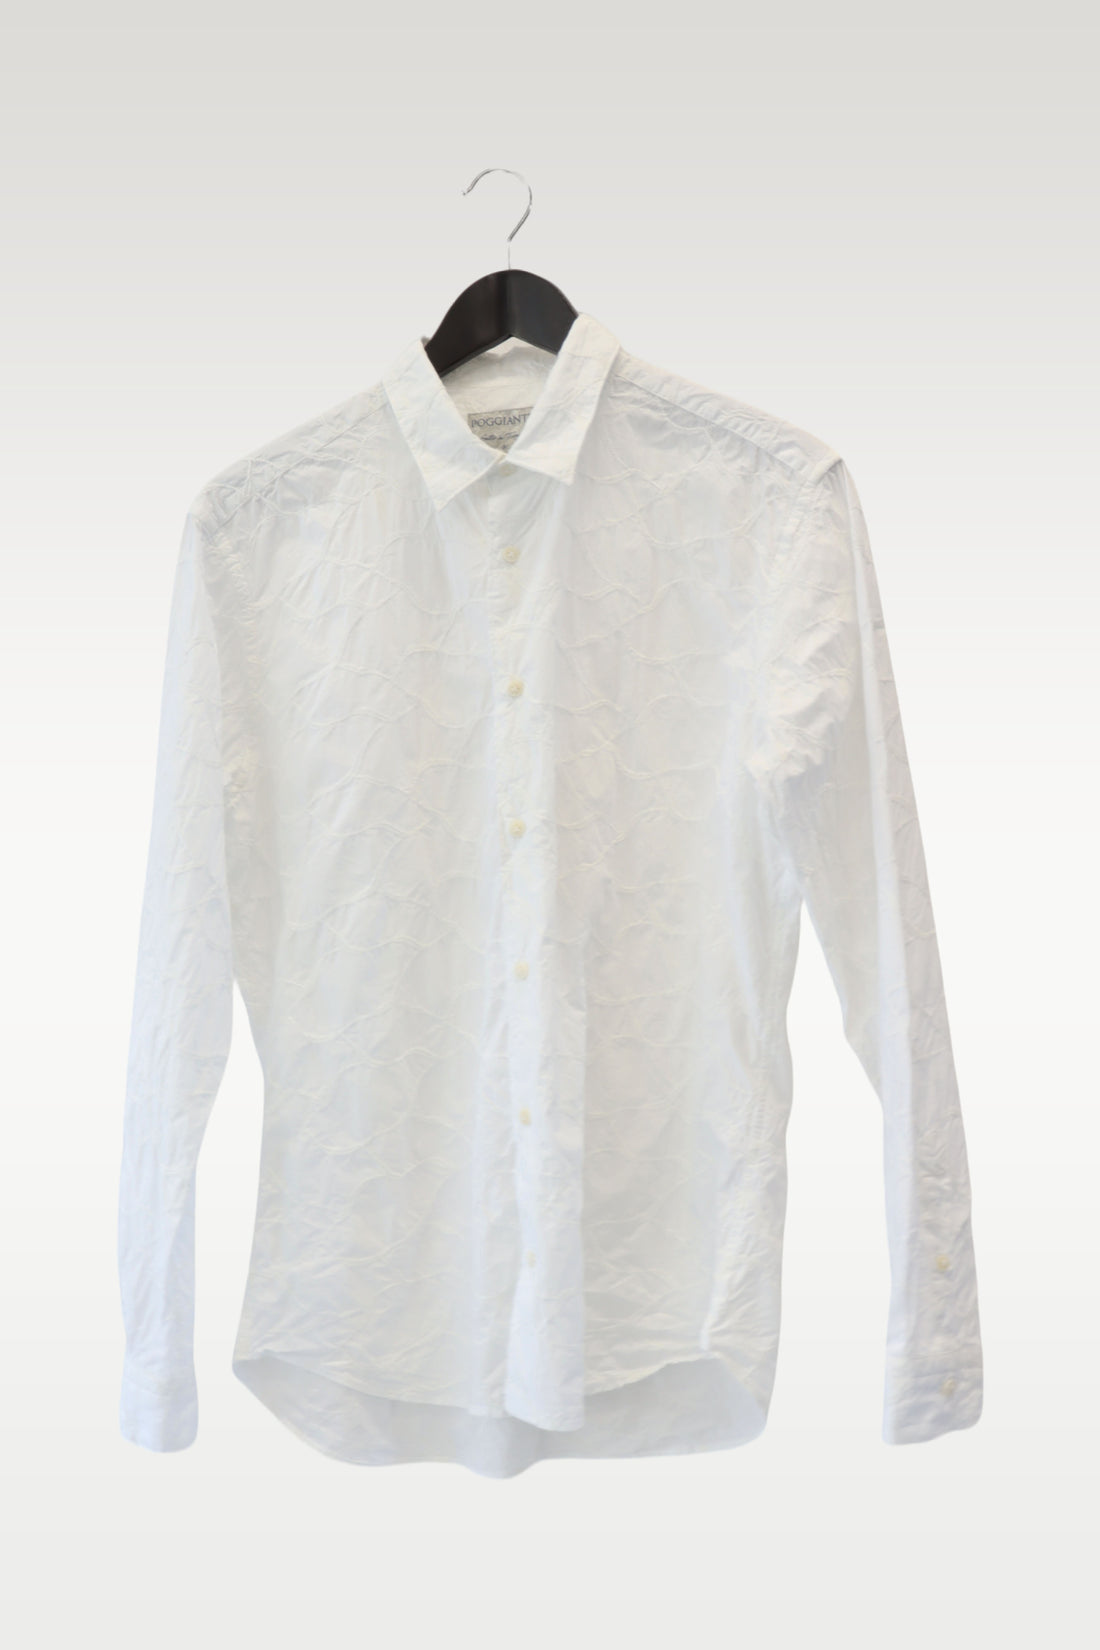 Poggianti L/S Shirt | Embellished White